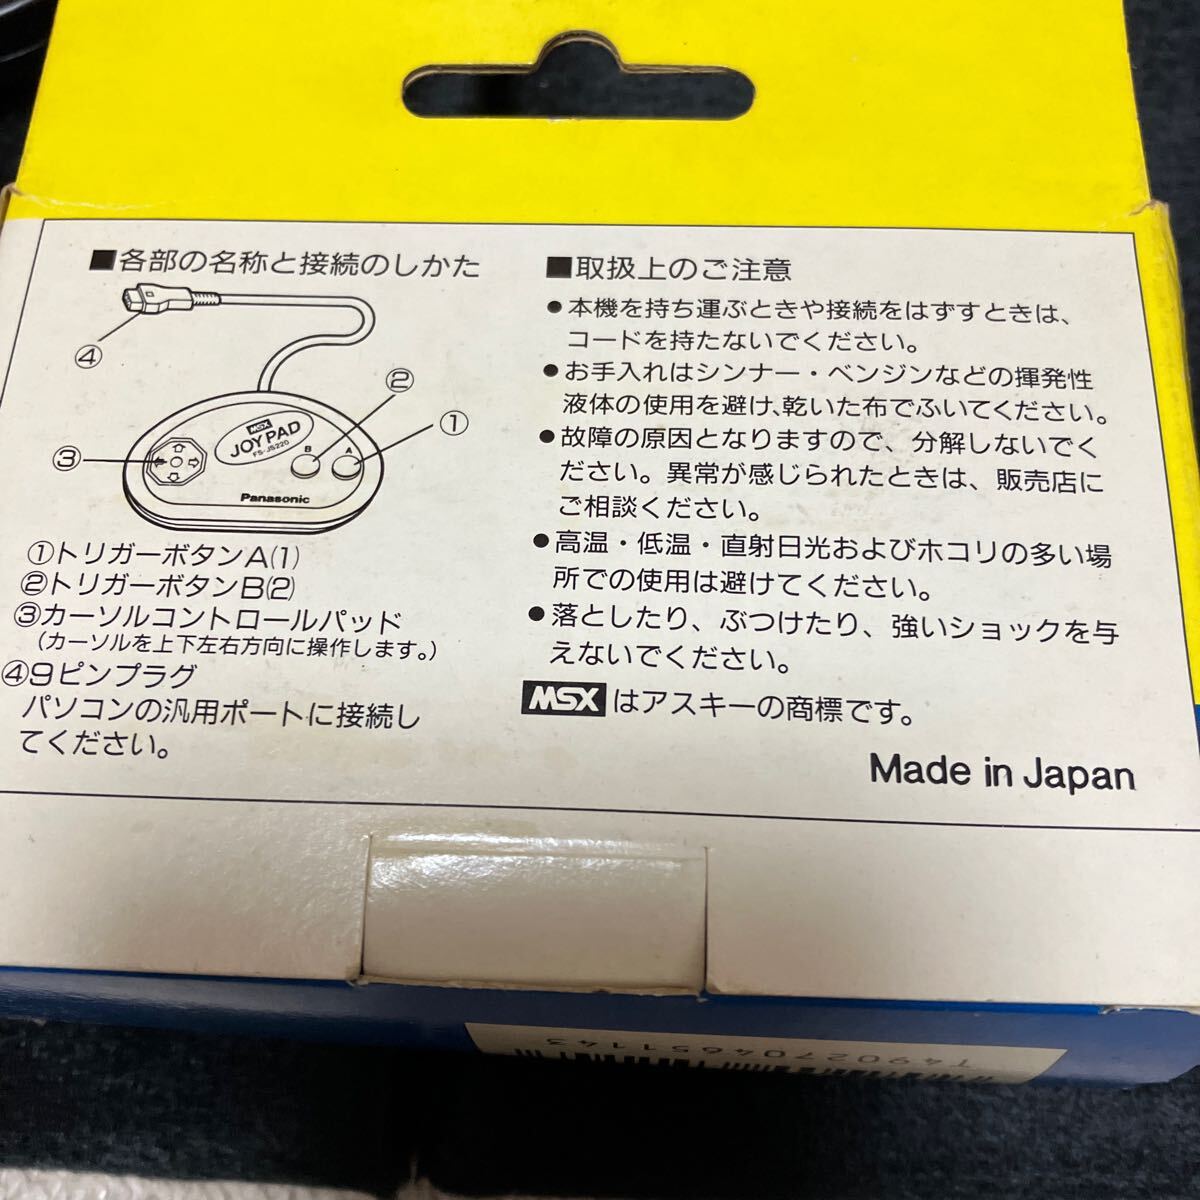  Panasonic MSX for Joy pad FS-JS220